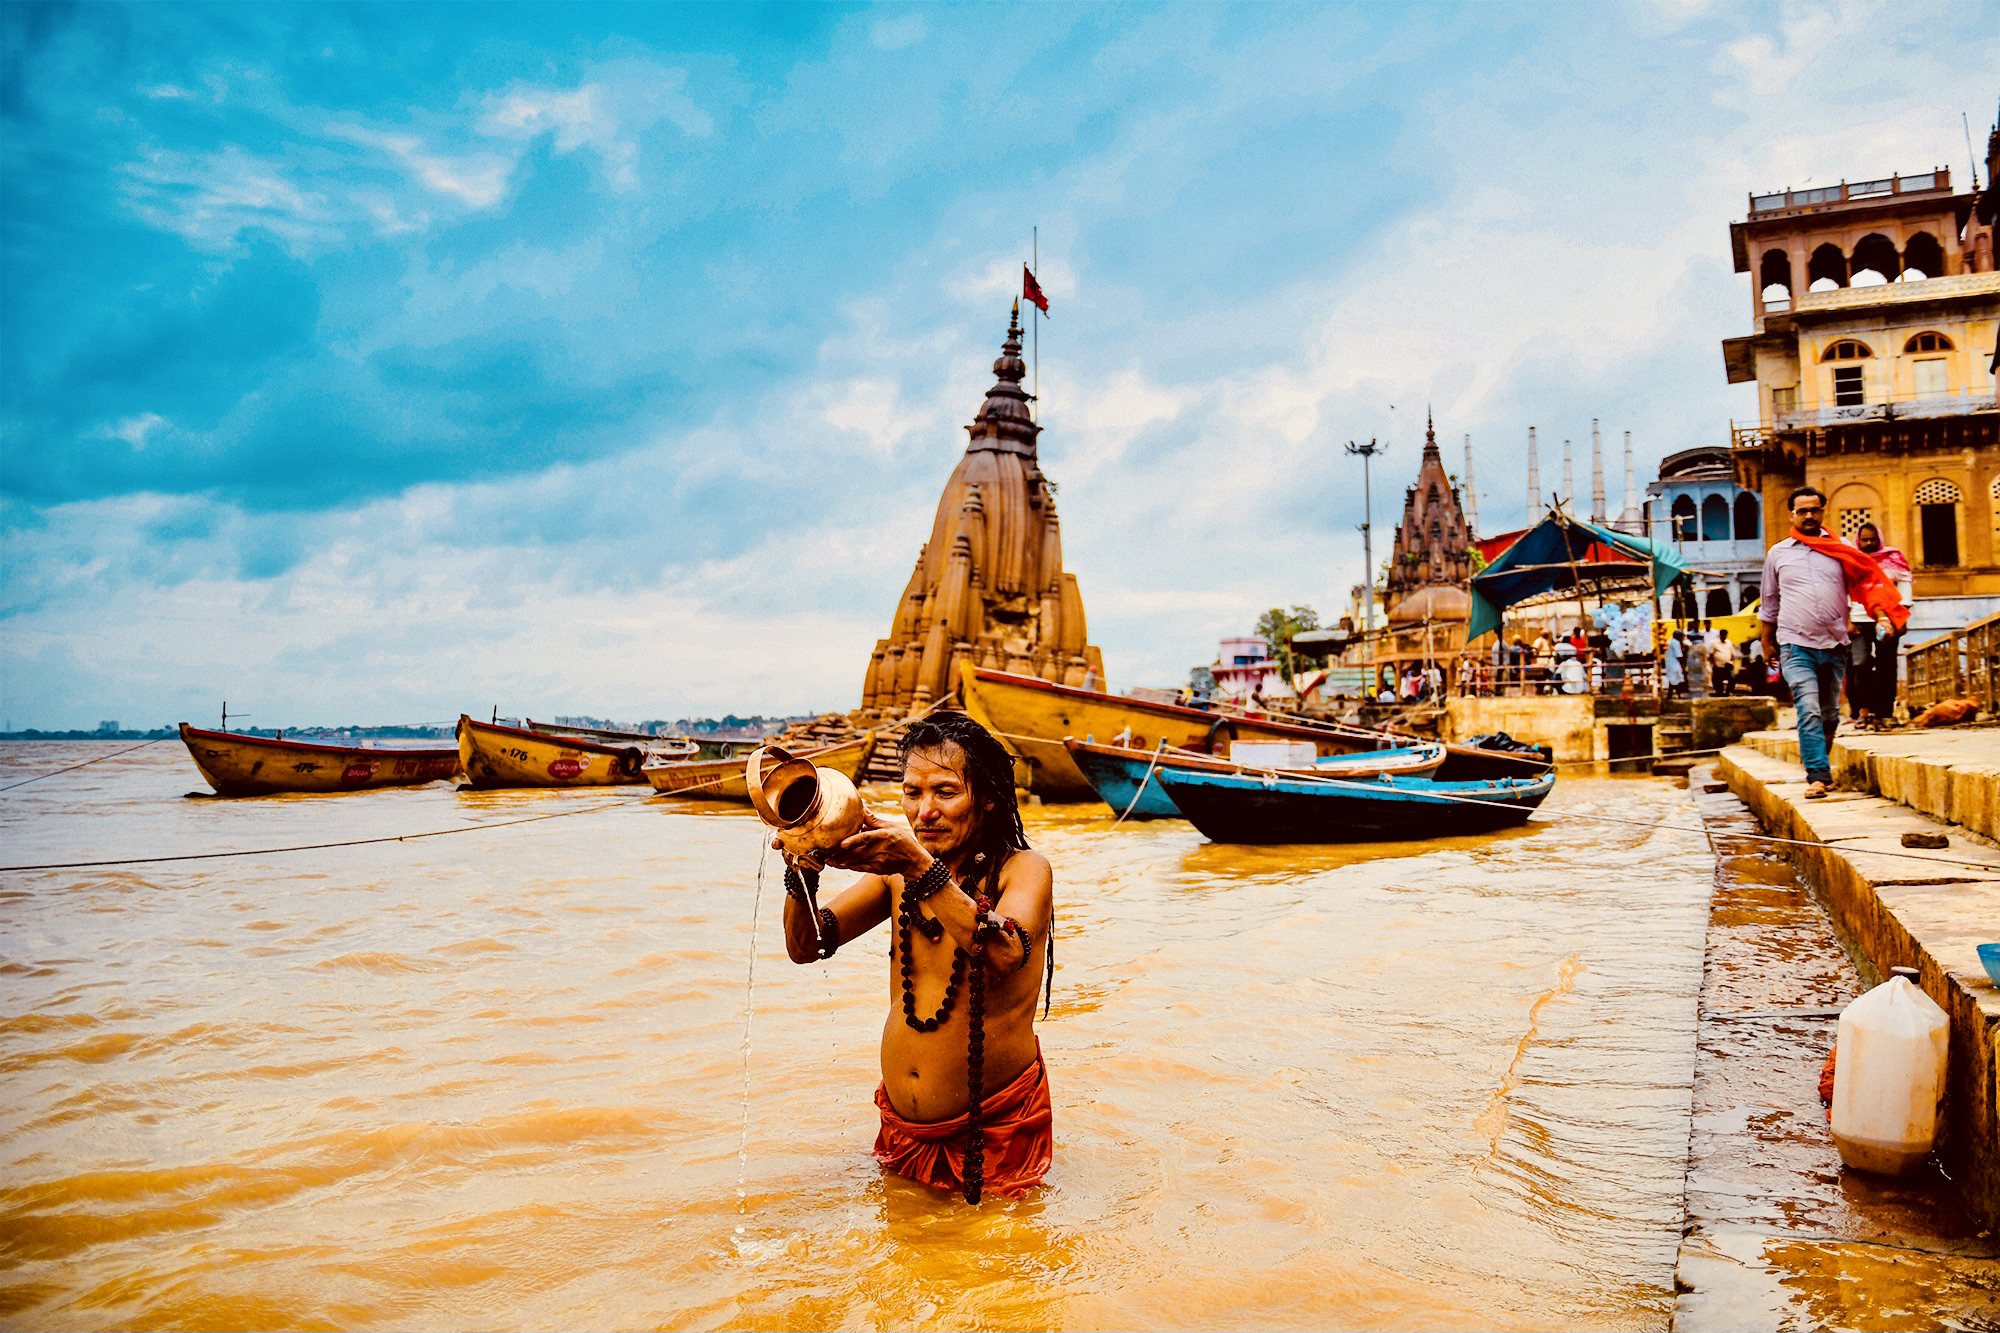 Varanasi – Immersive experiences